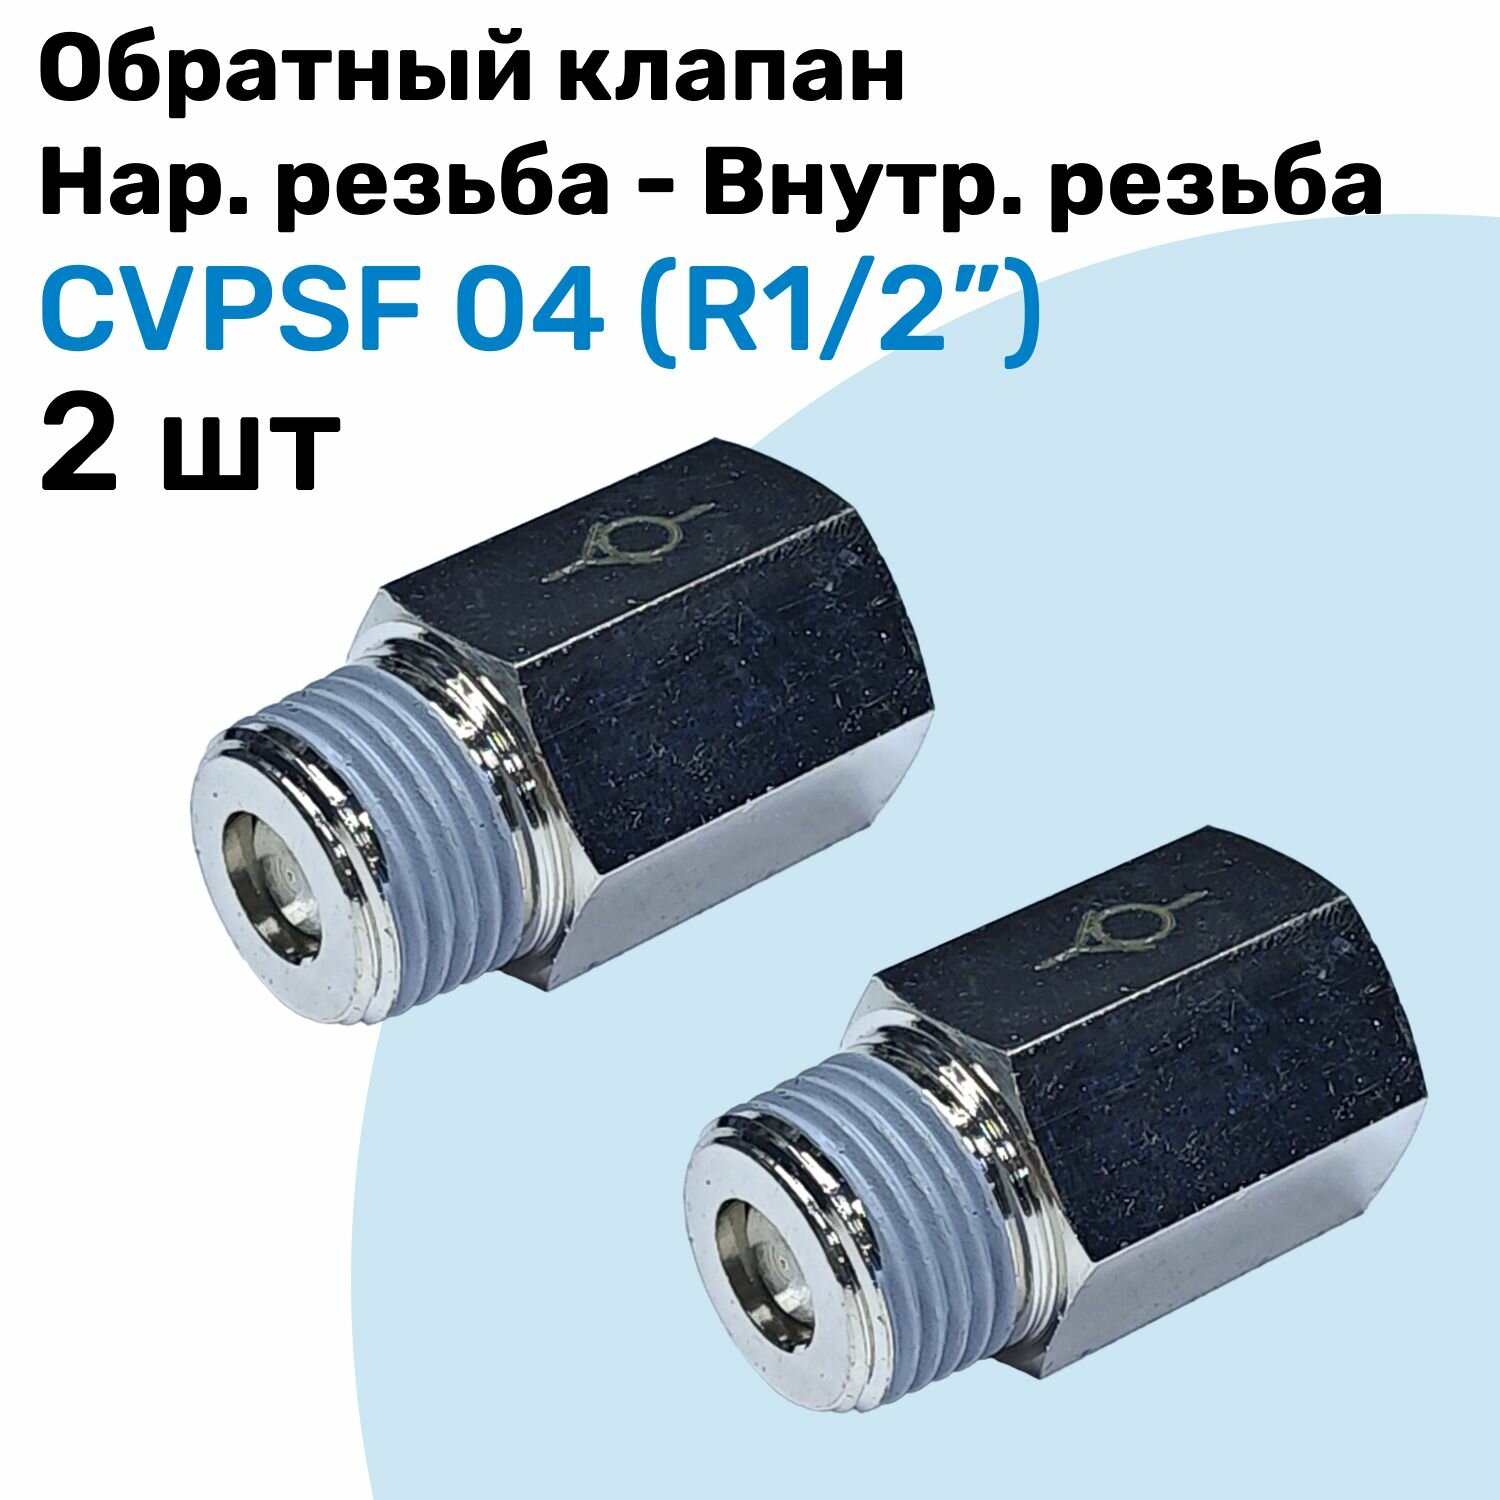 Обратный клапан латунный CVPSF 04, R1/2", Внешняя резьба - Внутренняя резьба, Пневматический клапан NBPT, Набор 2шт